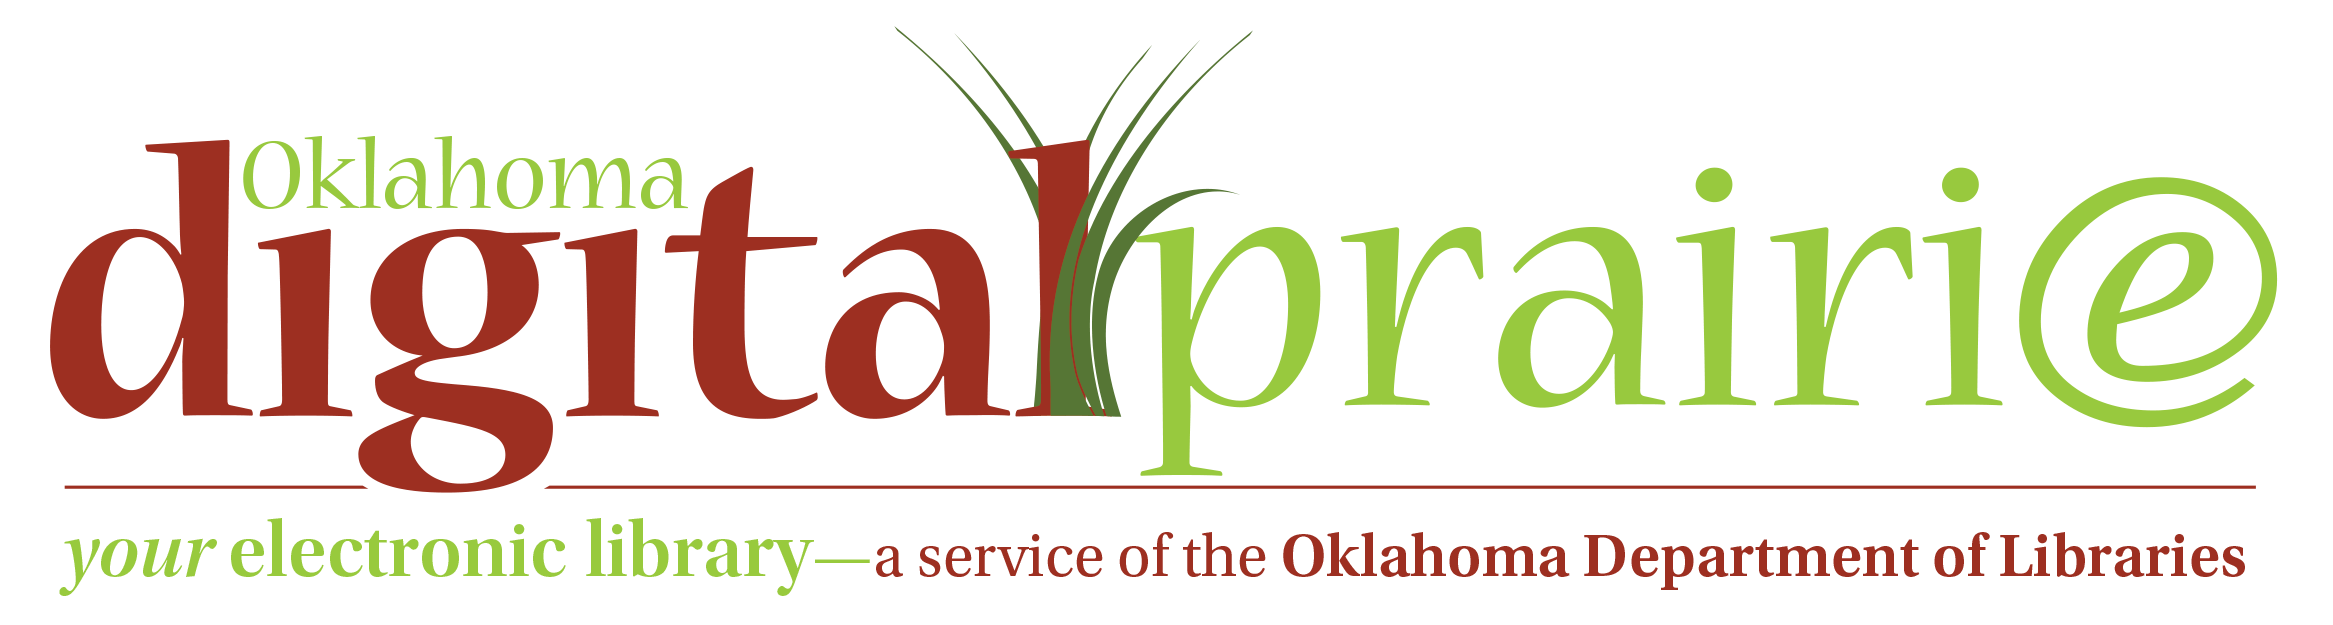 Prairie Logo - Oklahoma Digital Prairie: Documents, Image and Information